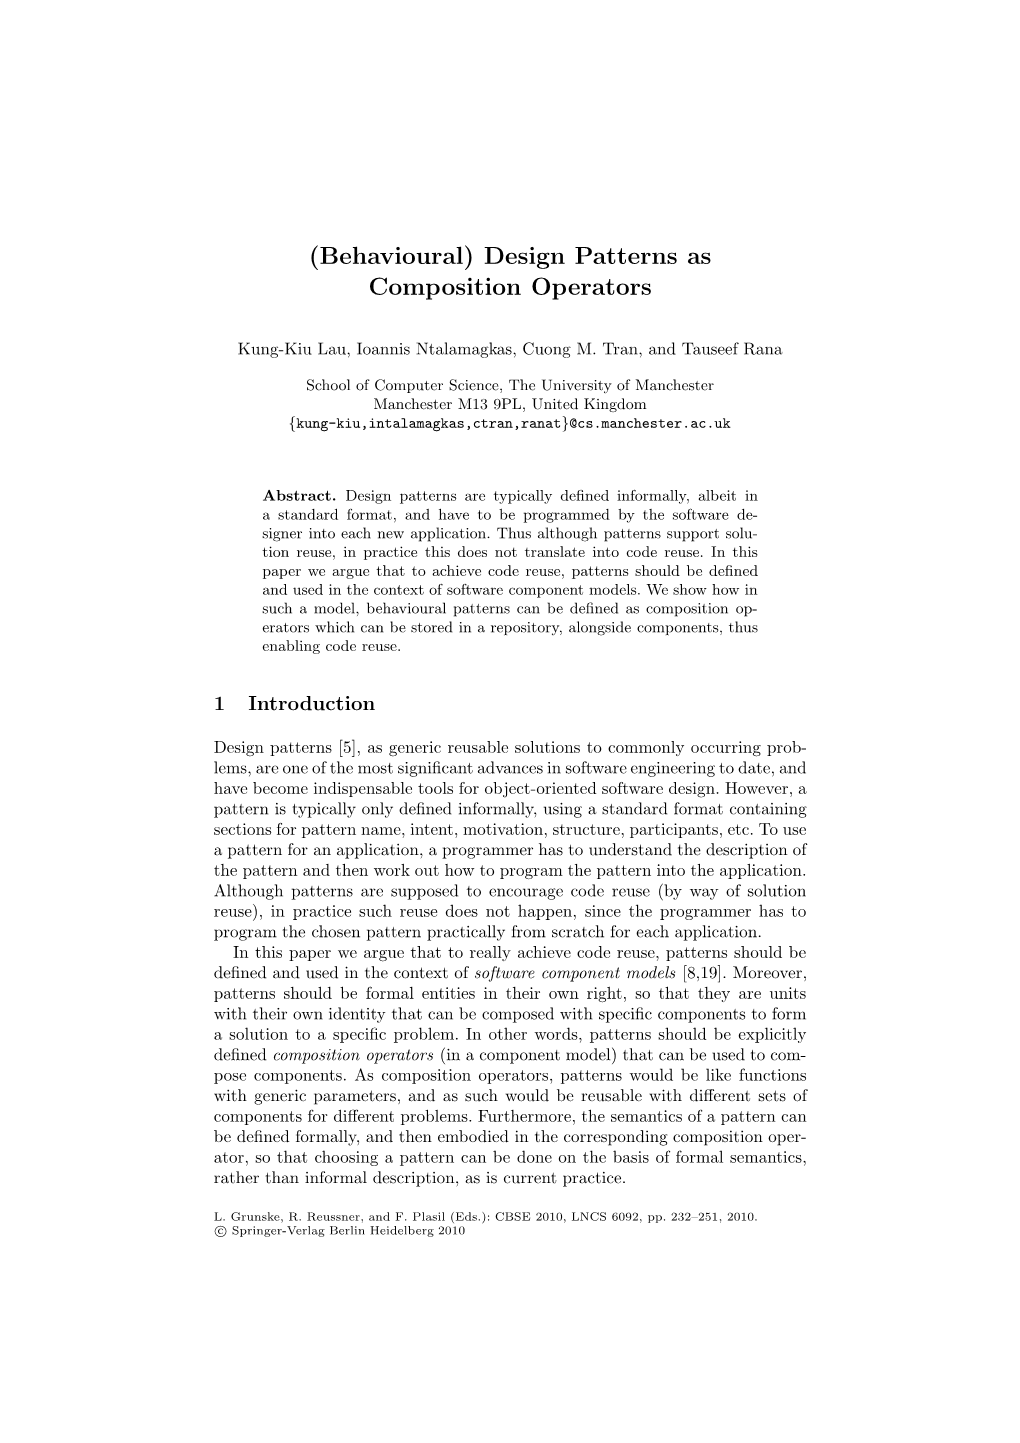 (Behavioural) Design Patterns As Composition Operators